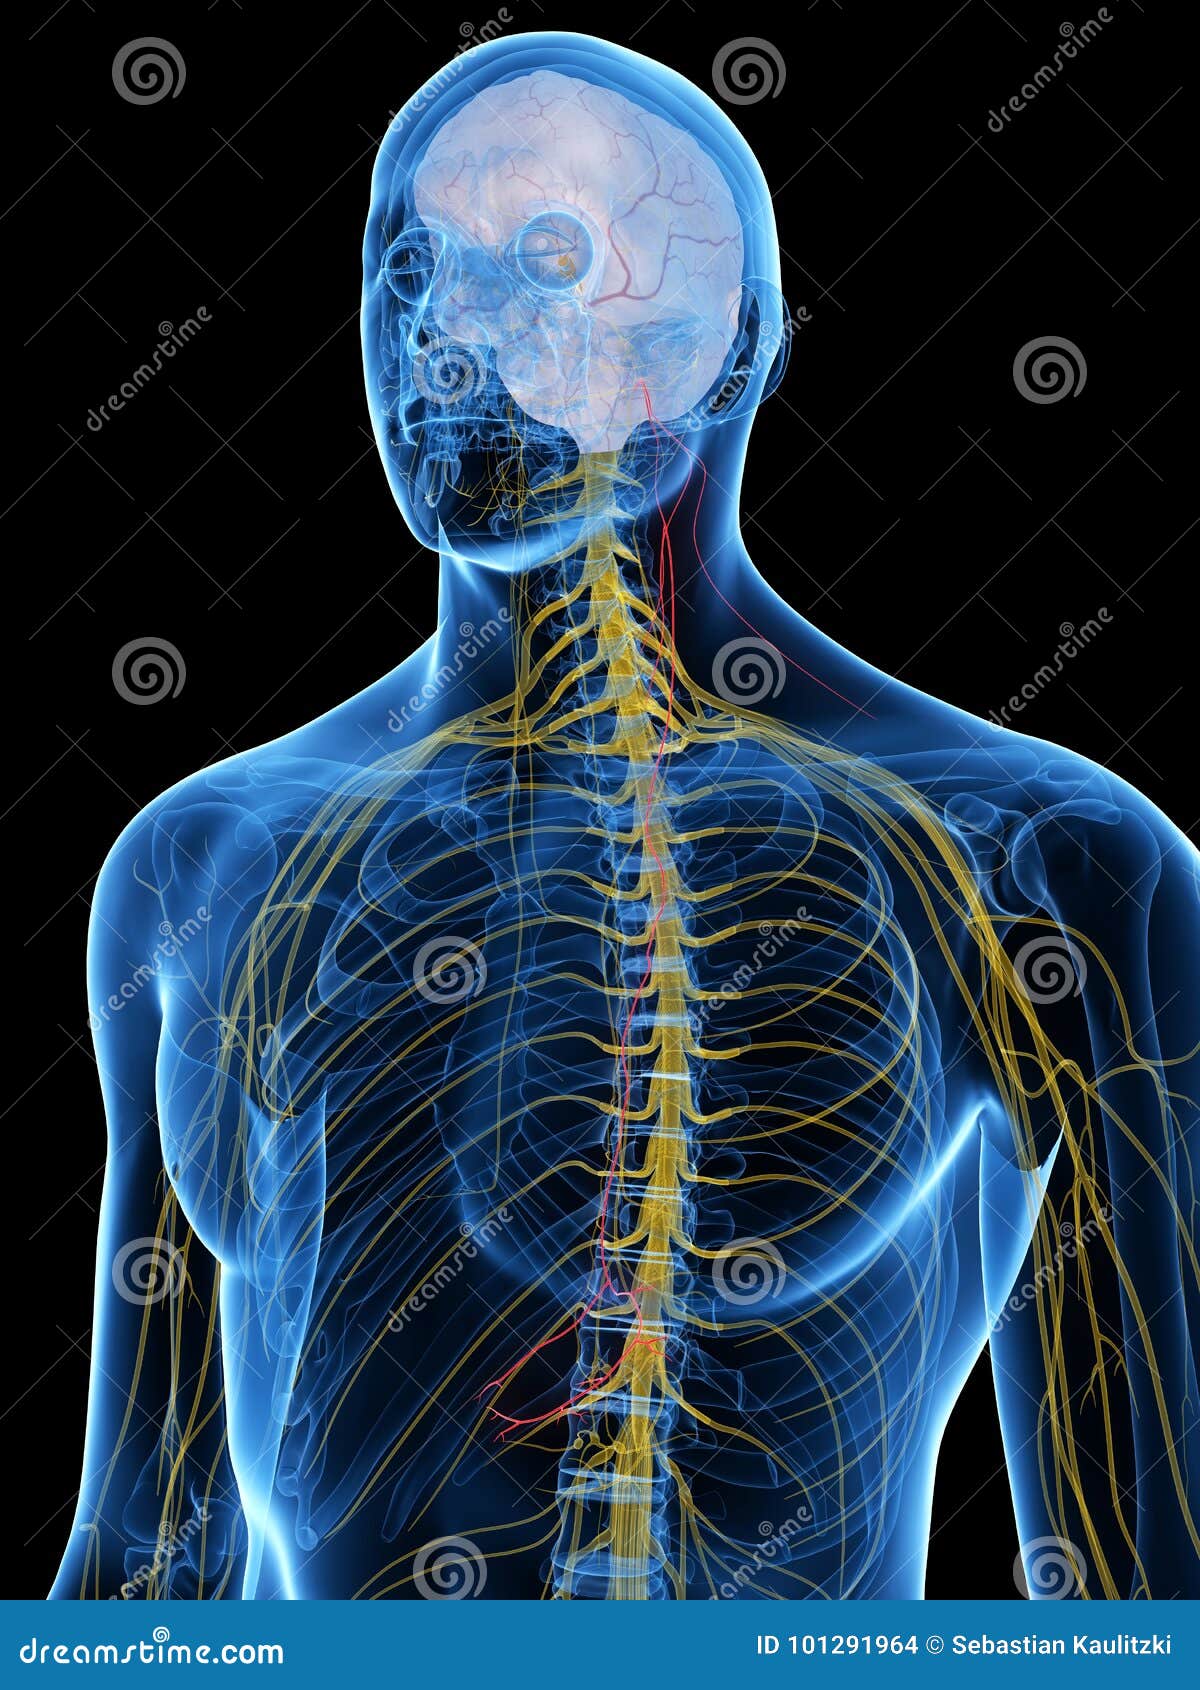 Le nerf vague illustration stock. Illustration du thorax - 101291964